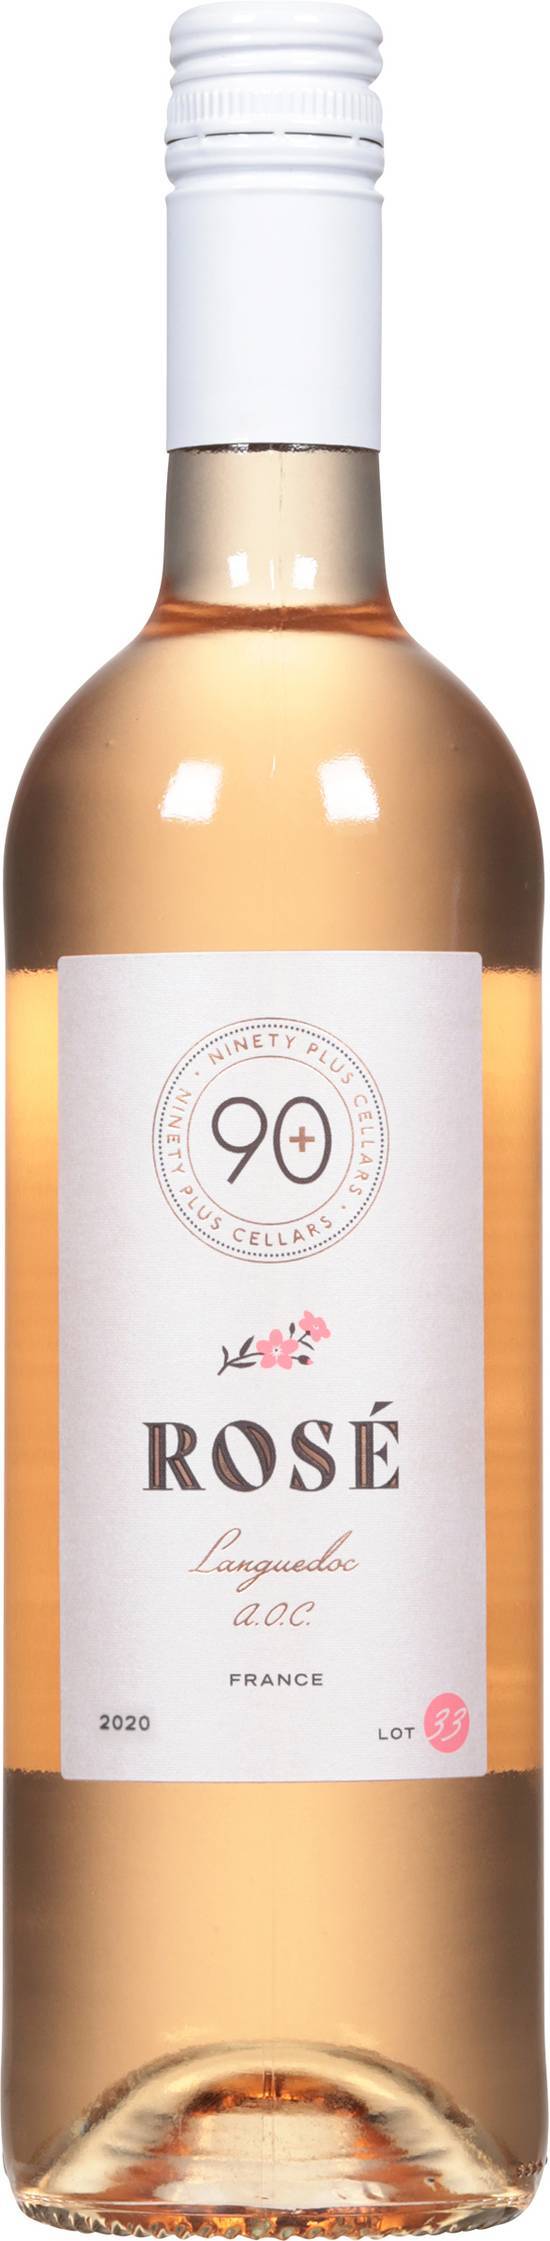 90+ Cellars Languedoc France Rose Wine (750 ml)